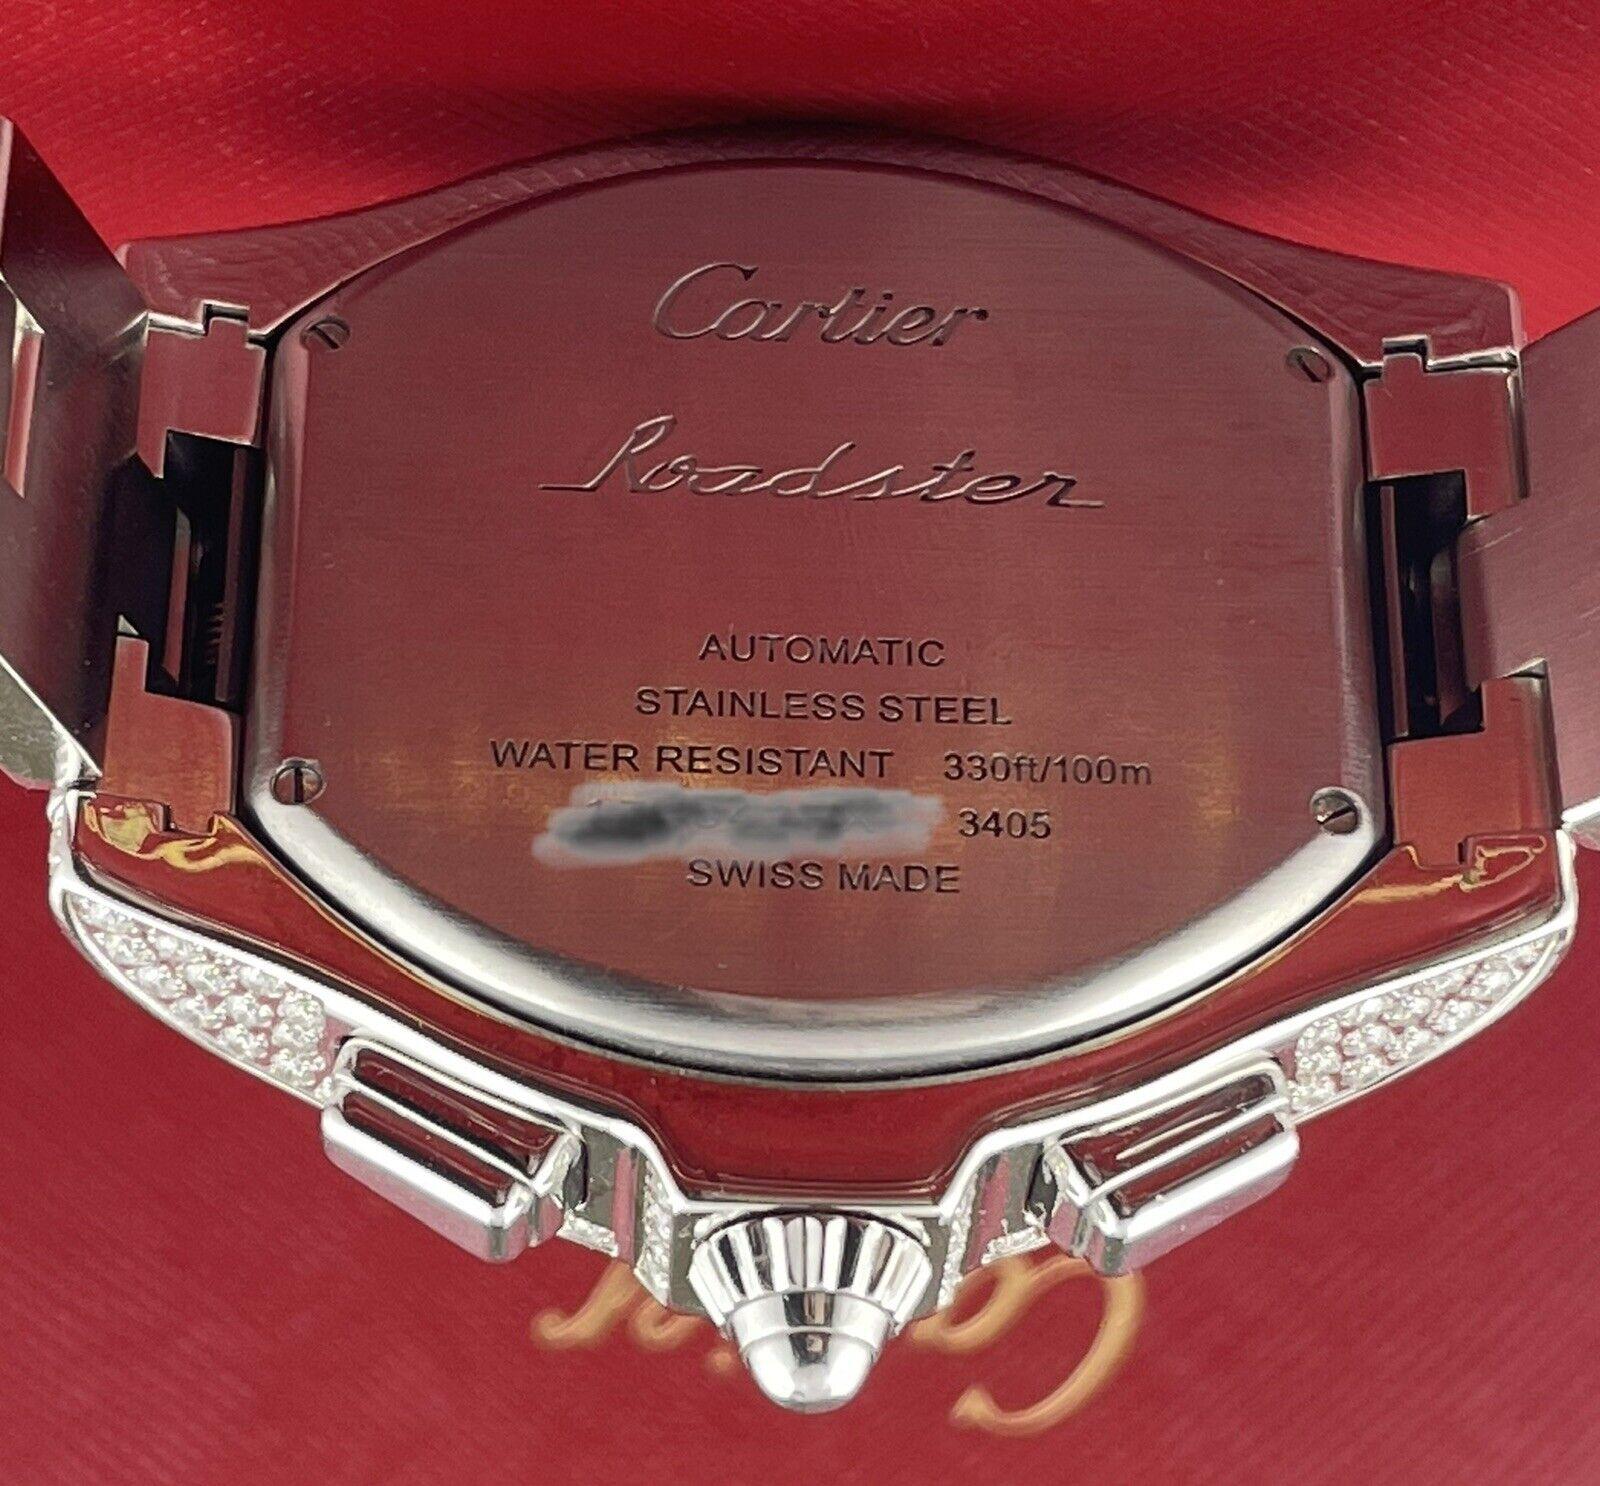 Cartier Roadster 44mm Men's Steel Watch White Dial Custom 12ct Diamonds Ref 3405 For Sale 1